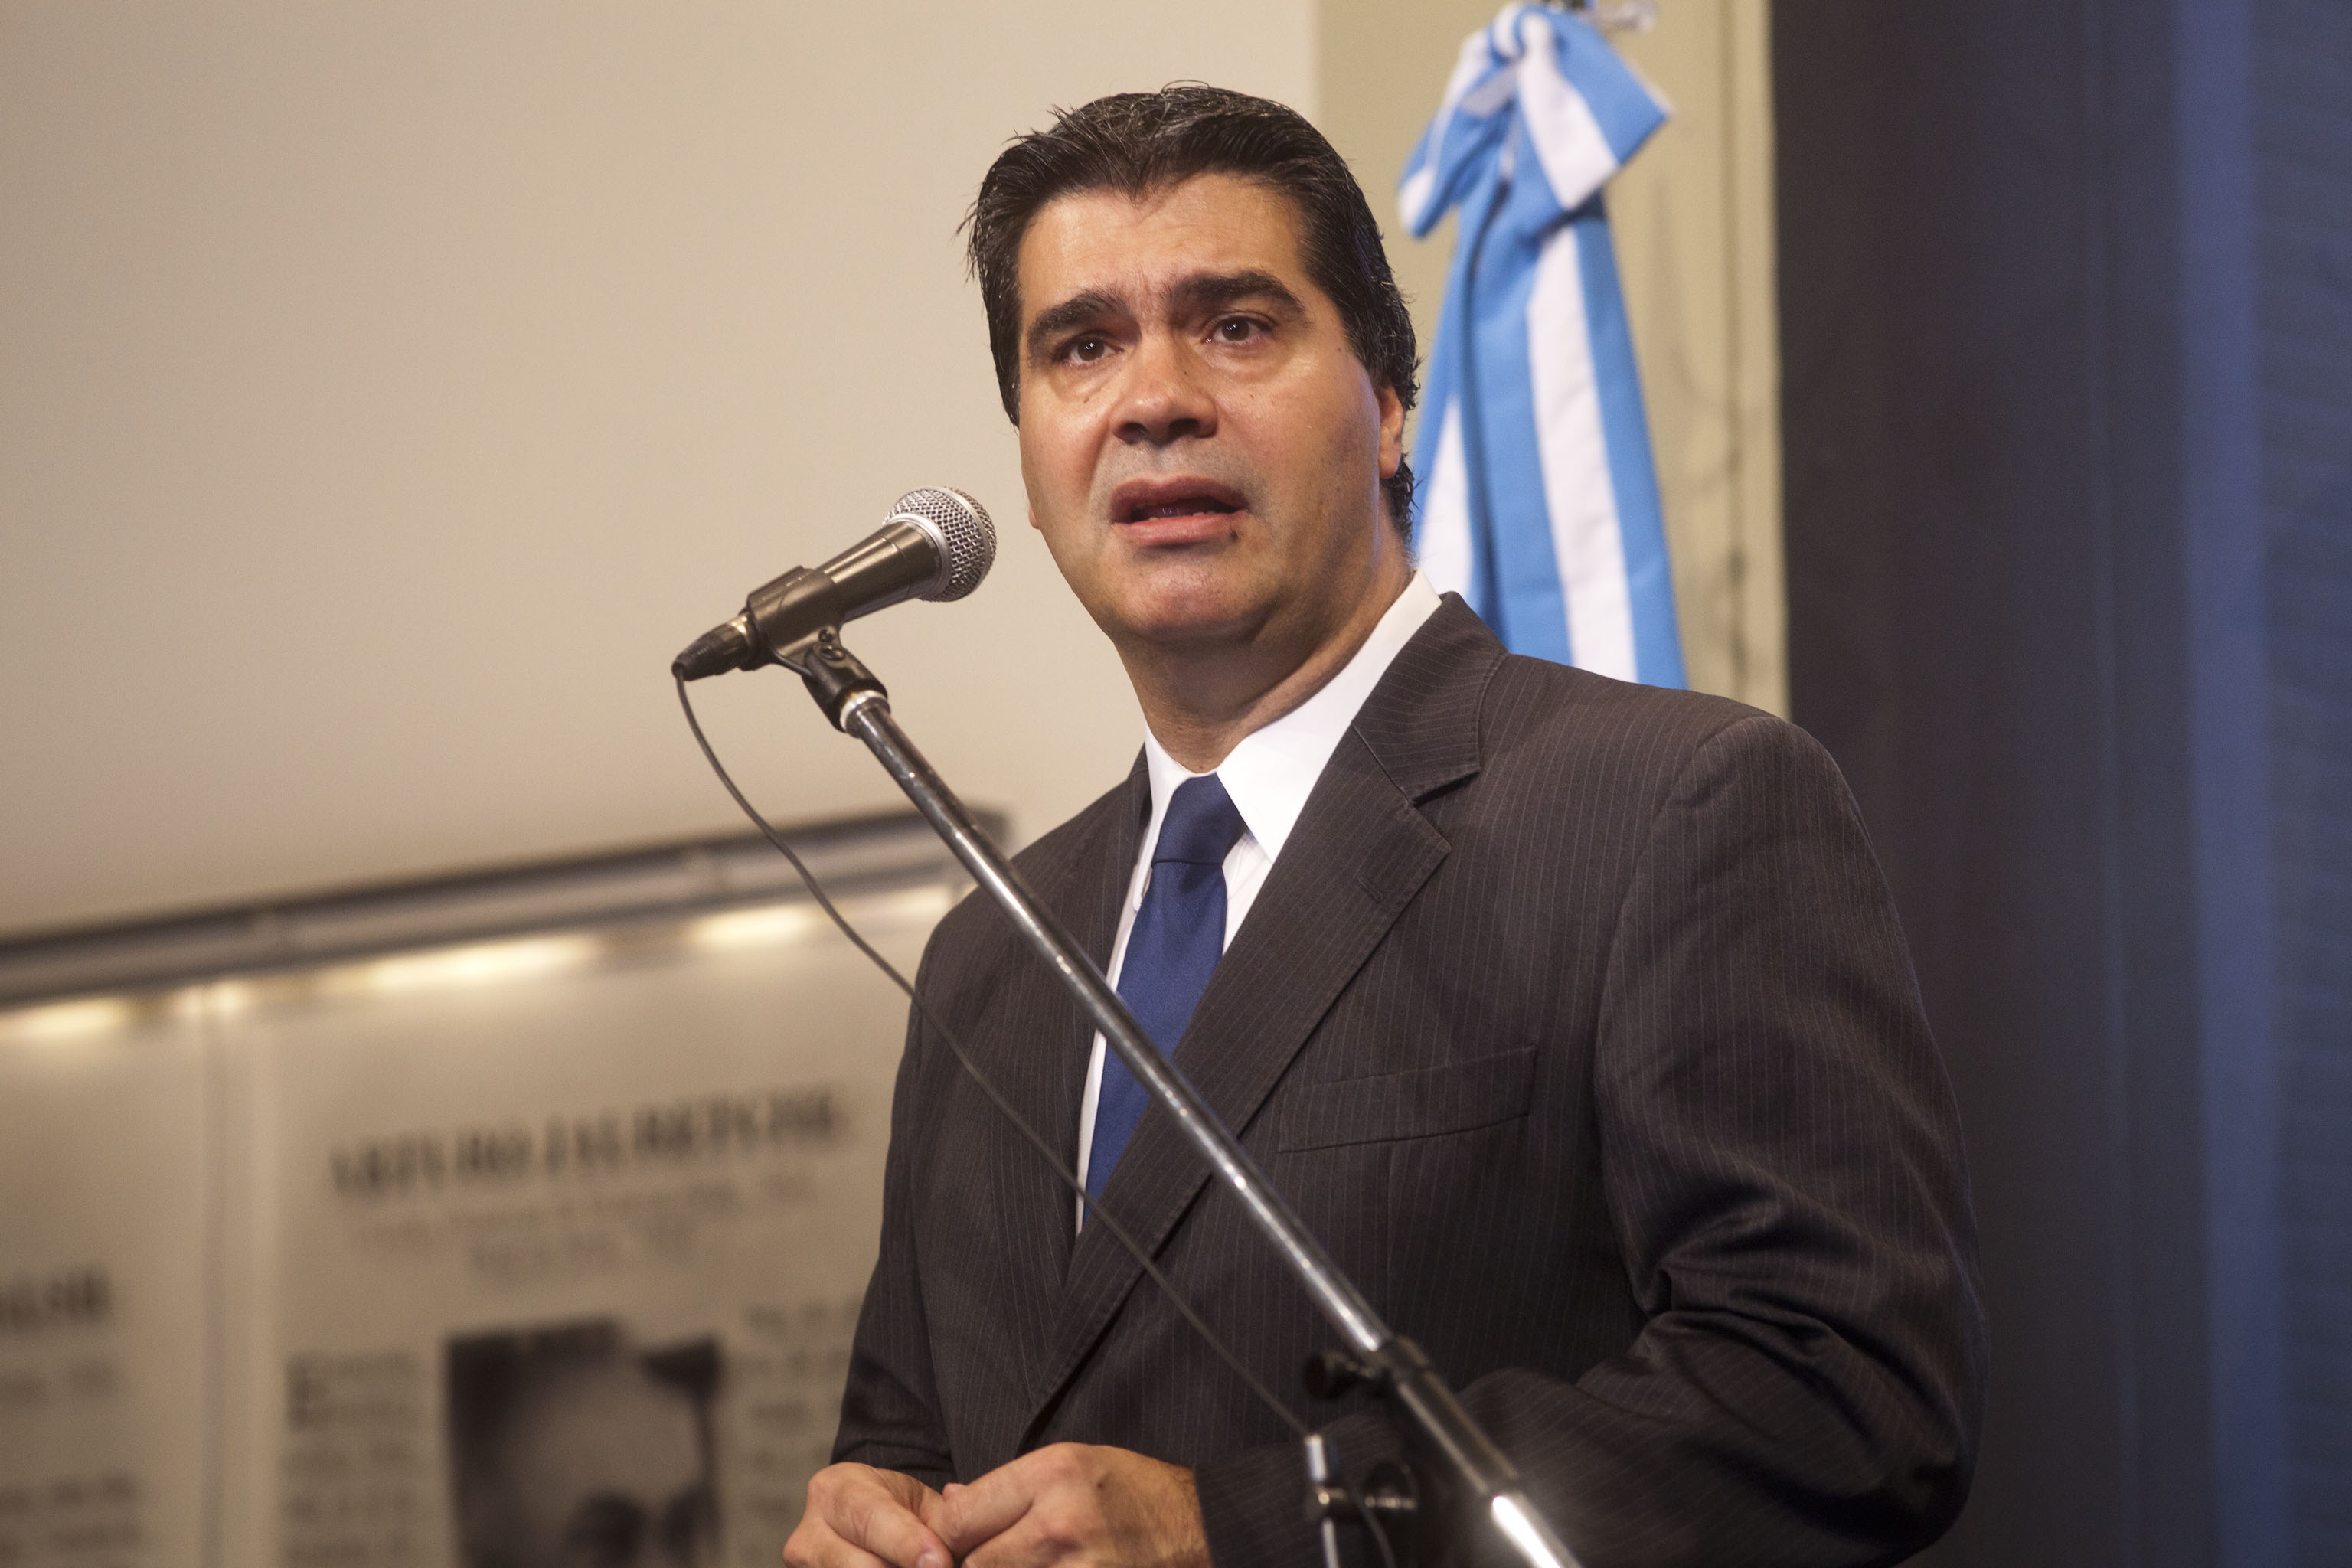 Fondos buitres: Argentina iniciará acciones ante la SEC para investigar “maniobras de carácater fraudulento”, informó Capitanich